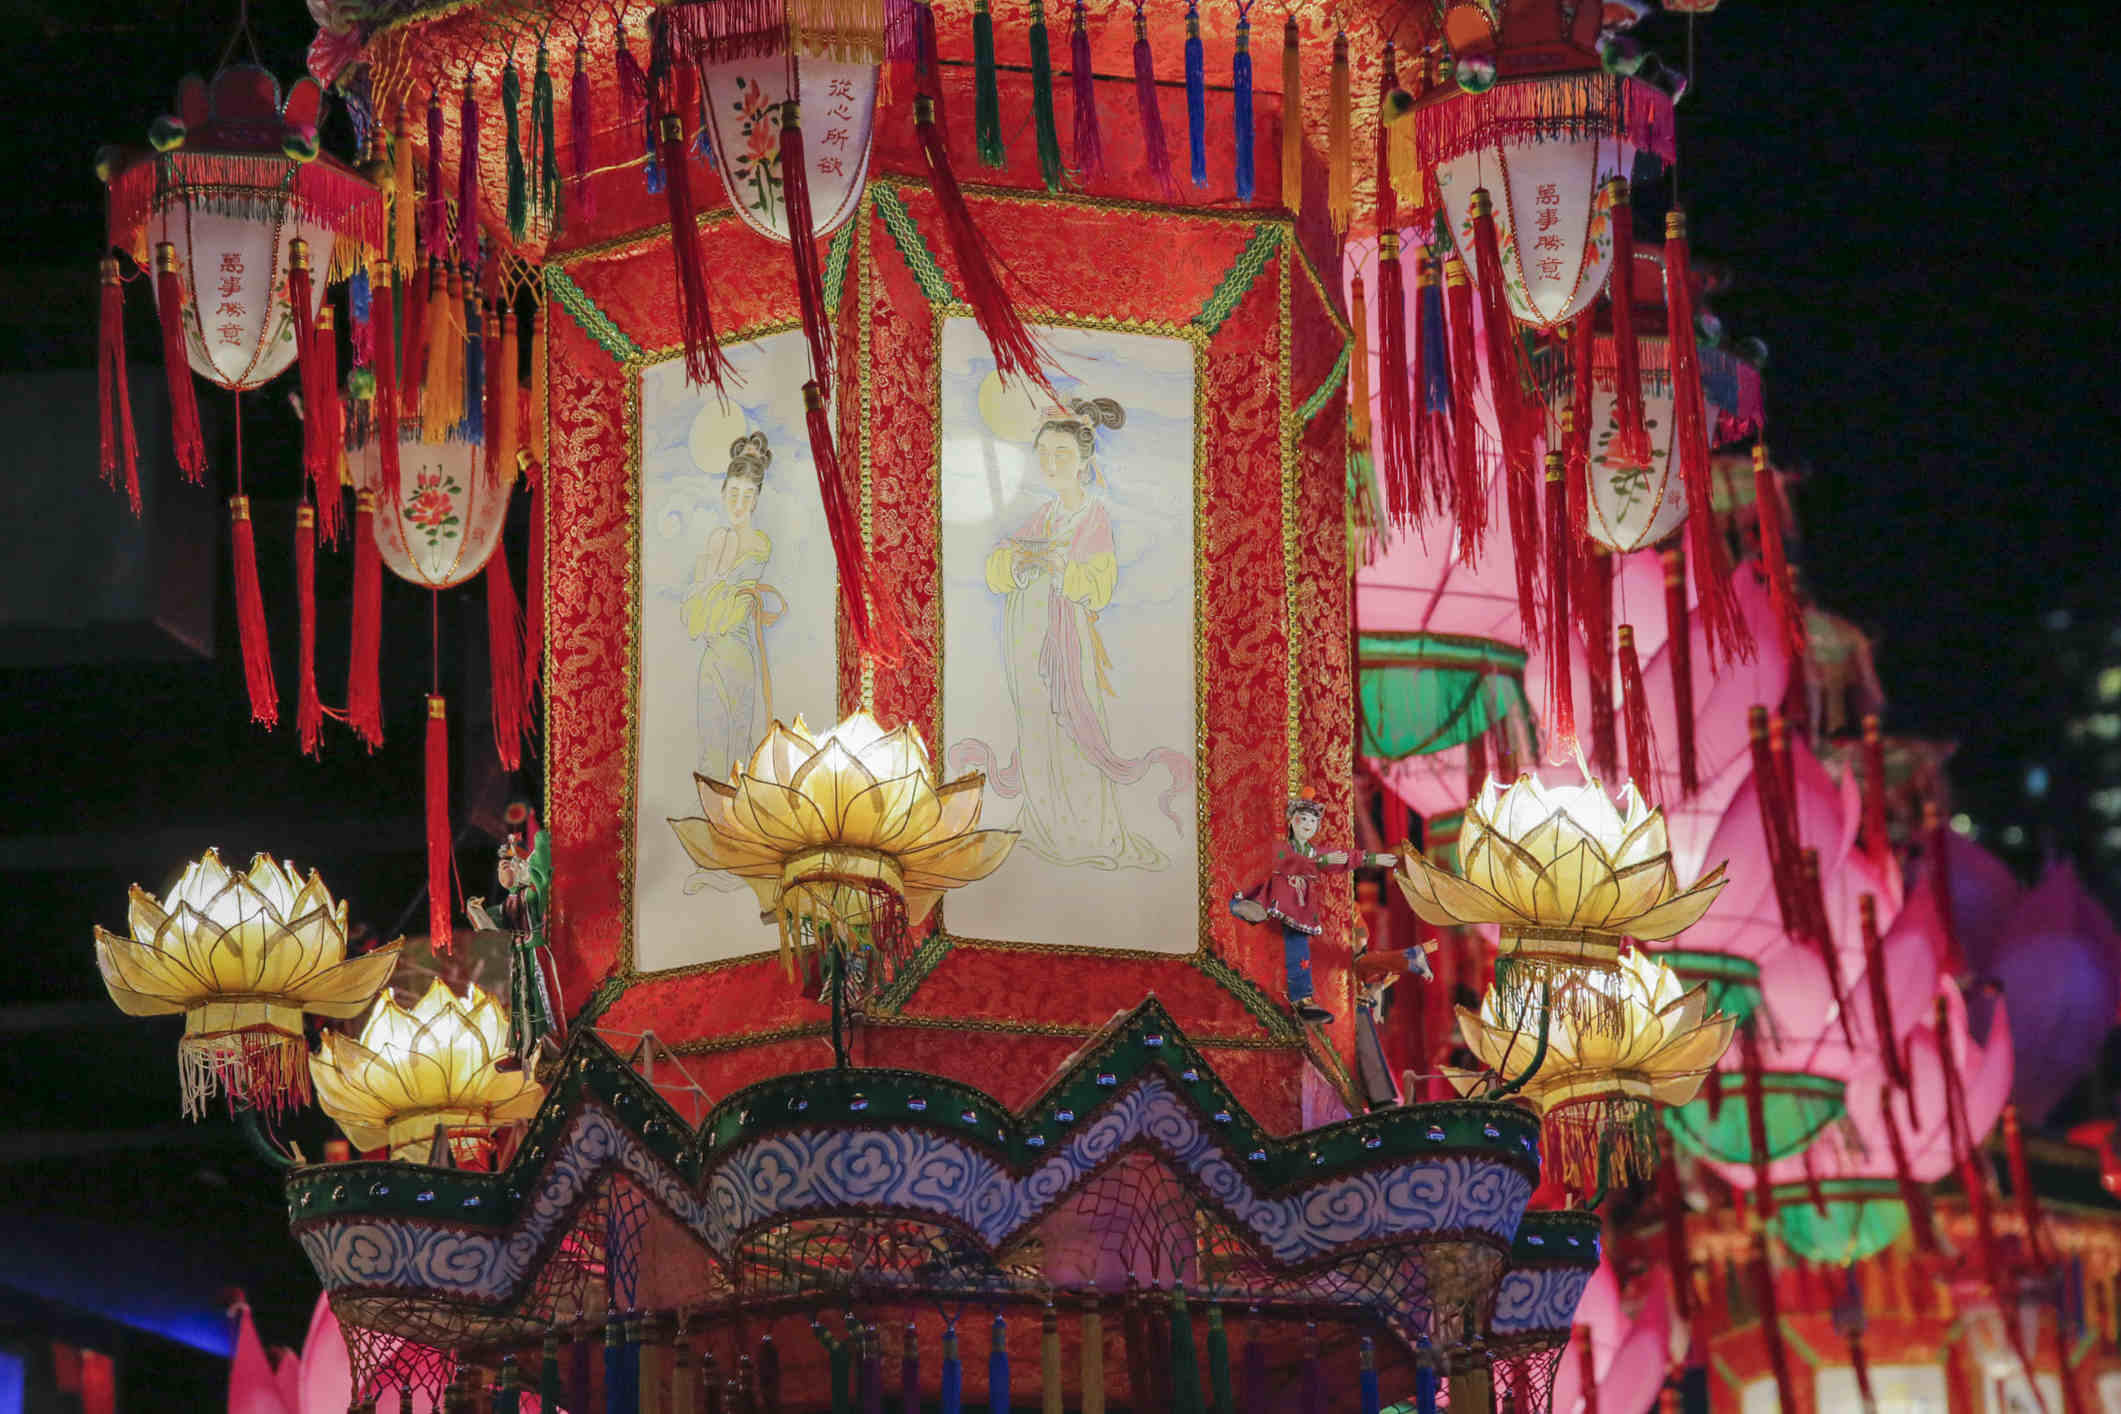 Exhibition on Traditional Craftsmanship of Lantern Making